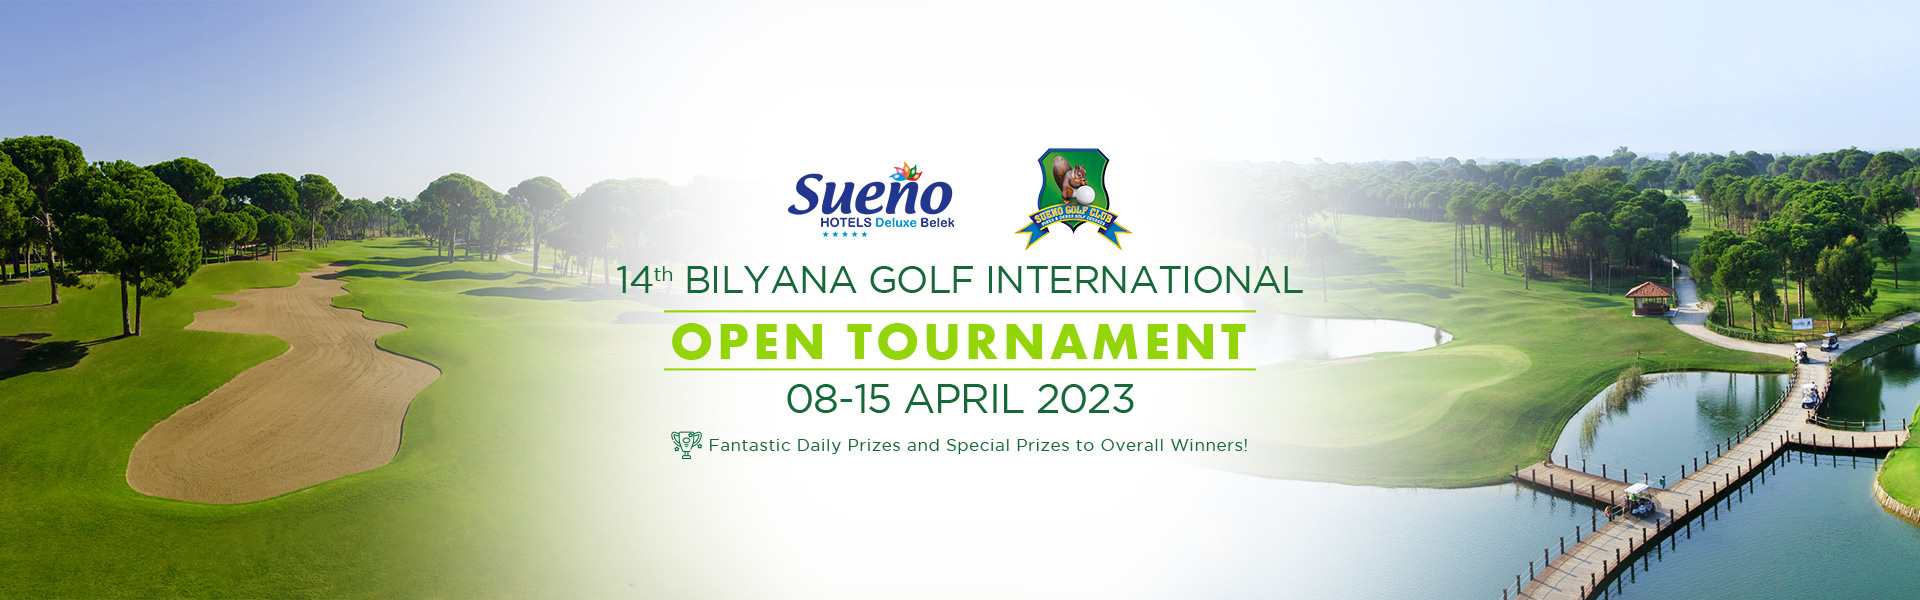 Bilyana Golf - 14Th BILYANA GOLF INTERNATIONAL TOURNAMENT